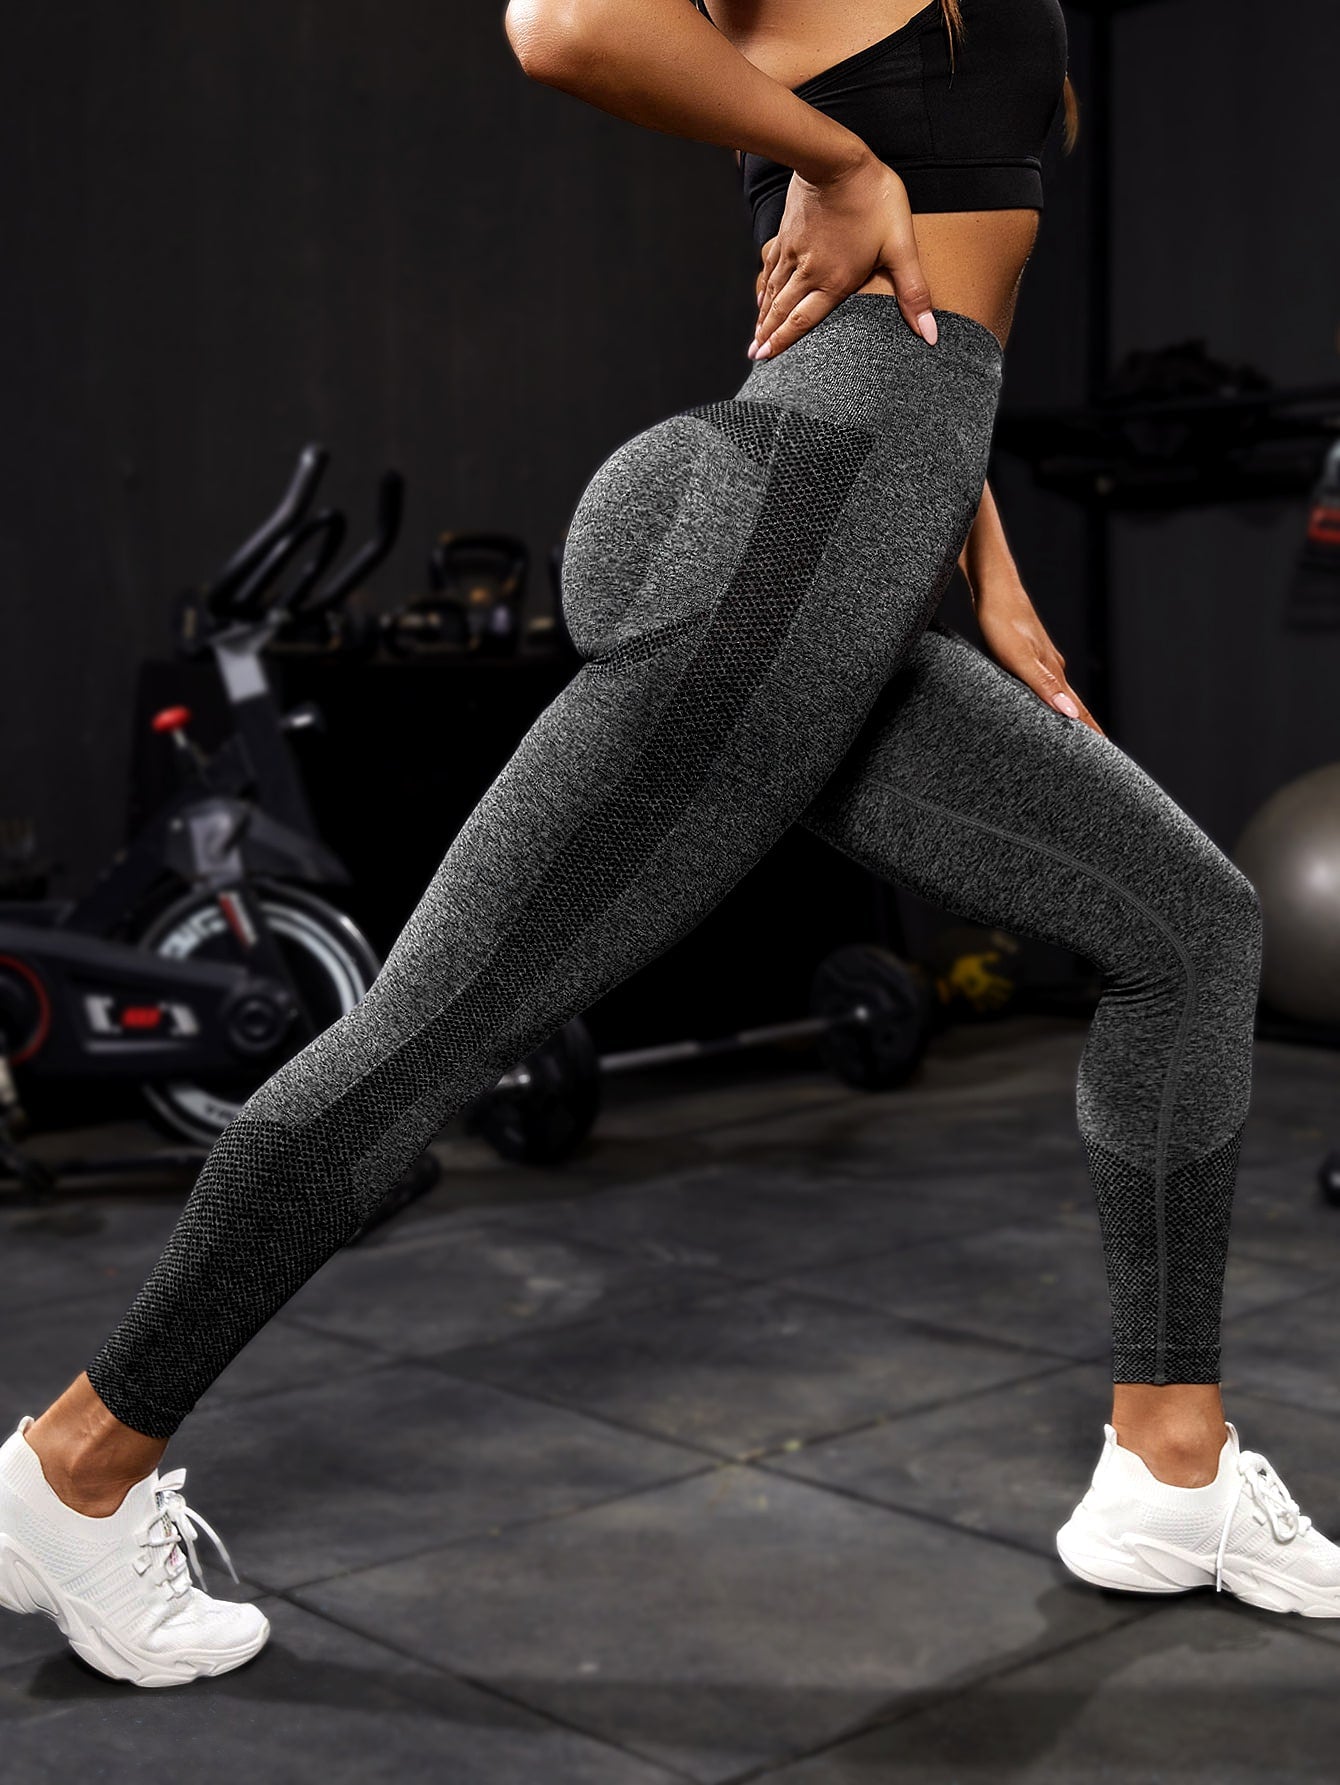 Yoga Sport Women Fitness Seamless Workout Leggings Fashion Push Up Leggings Gym Women Pants - Bonnie Lassio